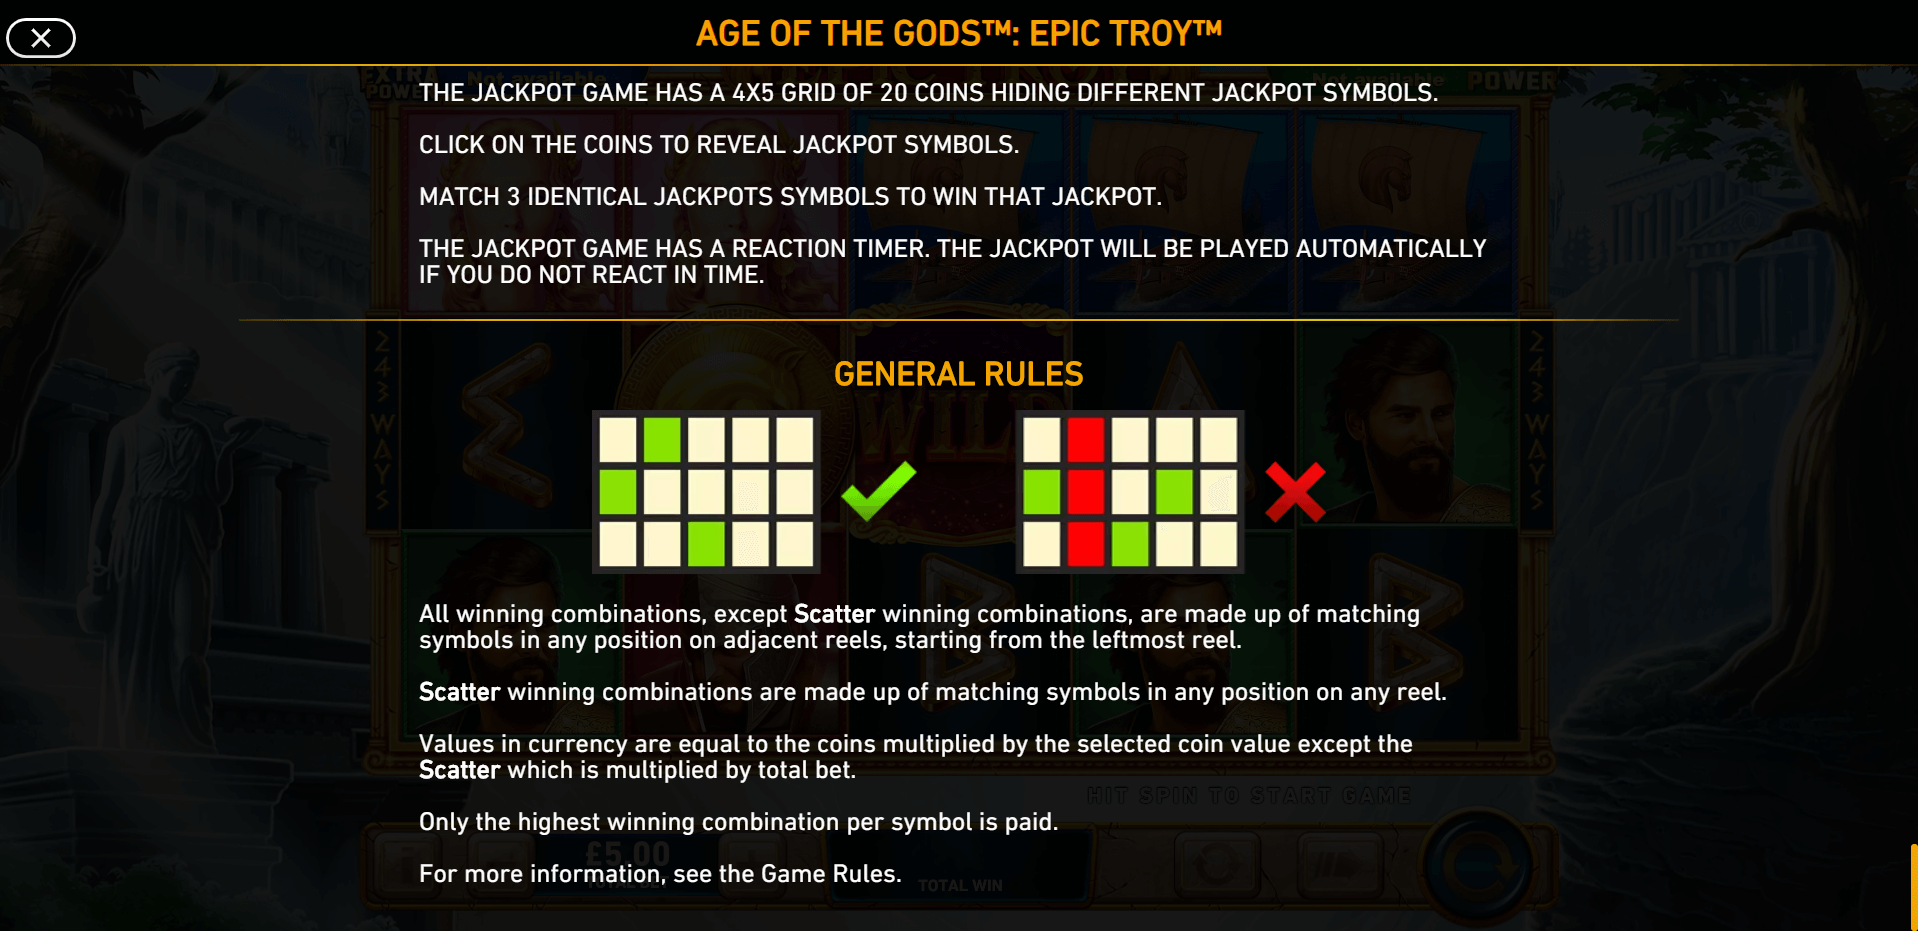 age of the gods epic troy slot machine detail image 0